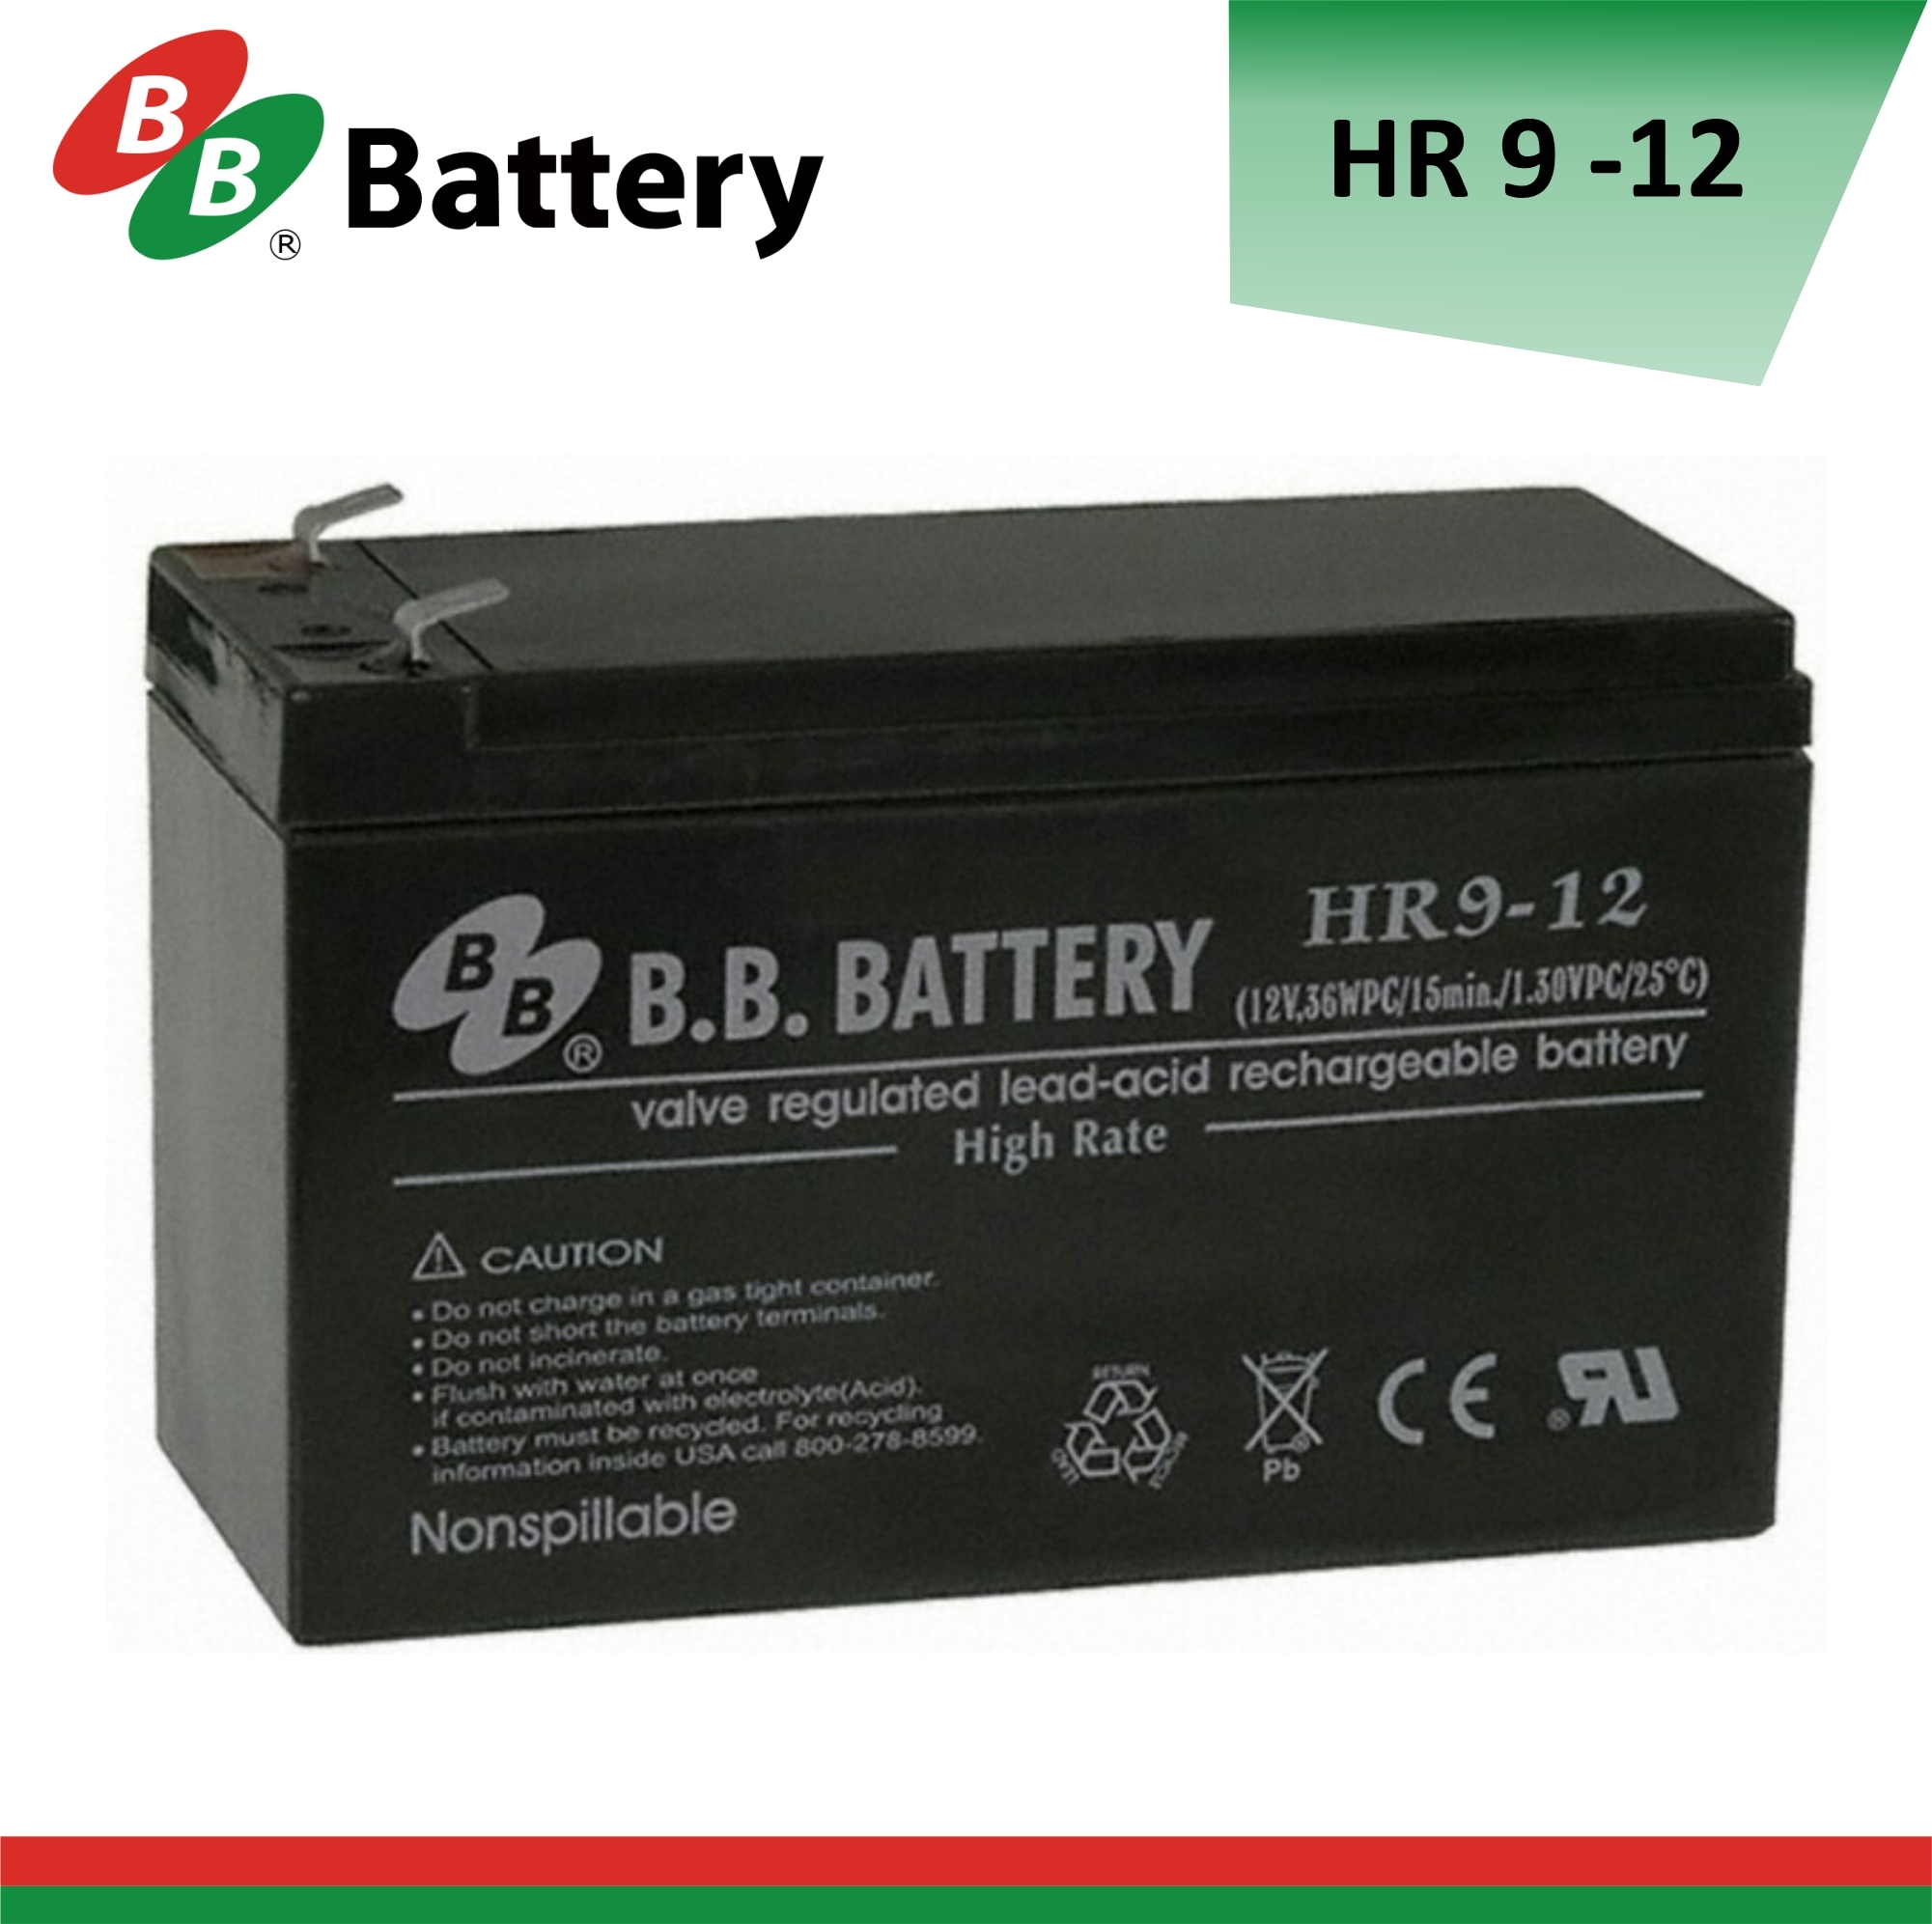 B b battery. Аккумулятор BB Battary HR 9-12. Батарея BB Battery hr9-12. Батарея аккумуляторная HR 9-12 B.B. Battery. Батарея b.b. Battery hr9-6.